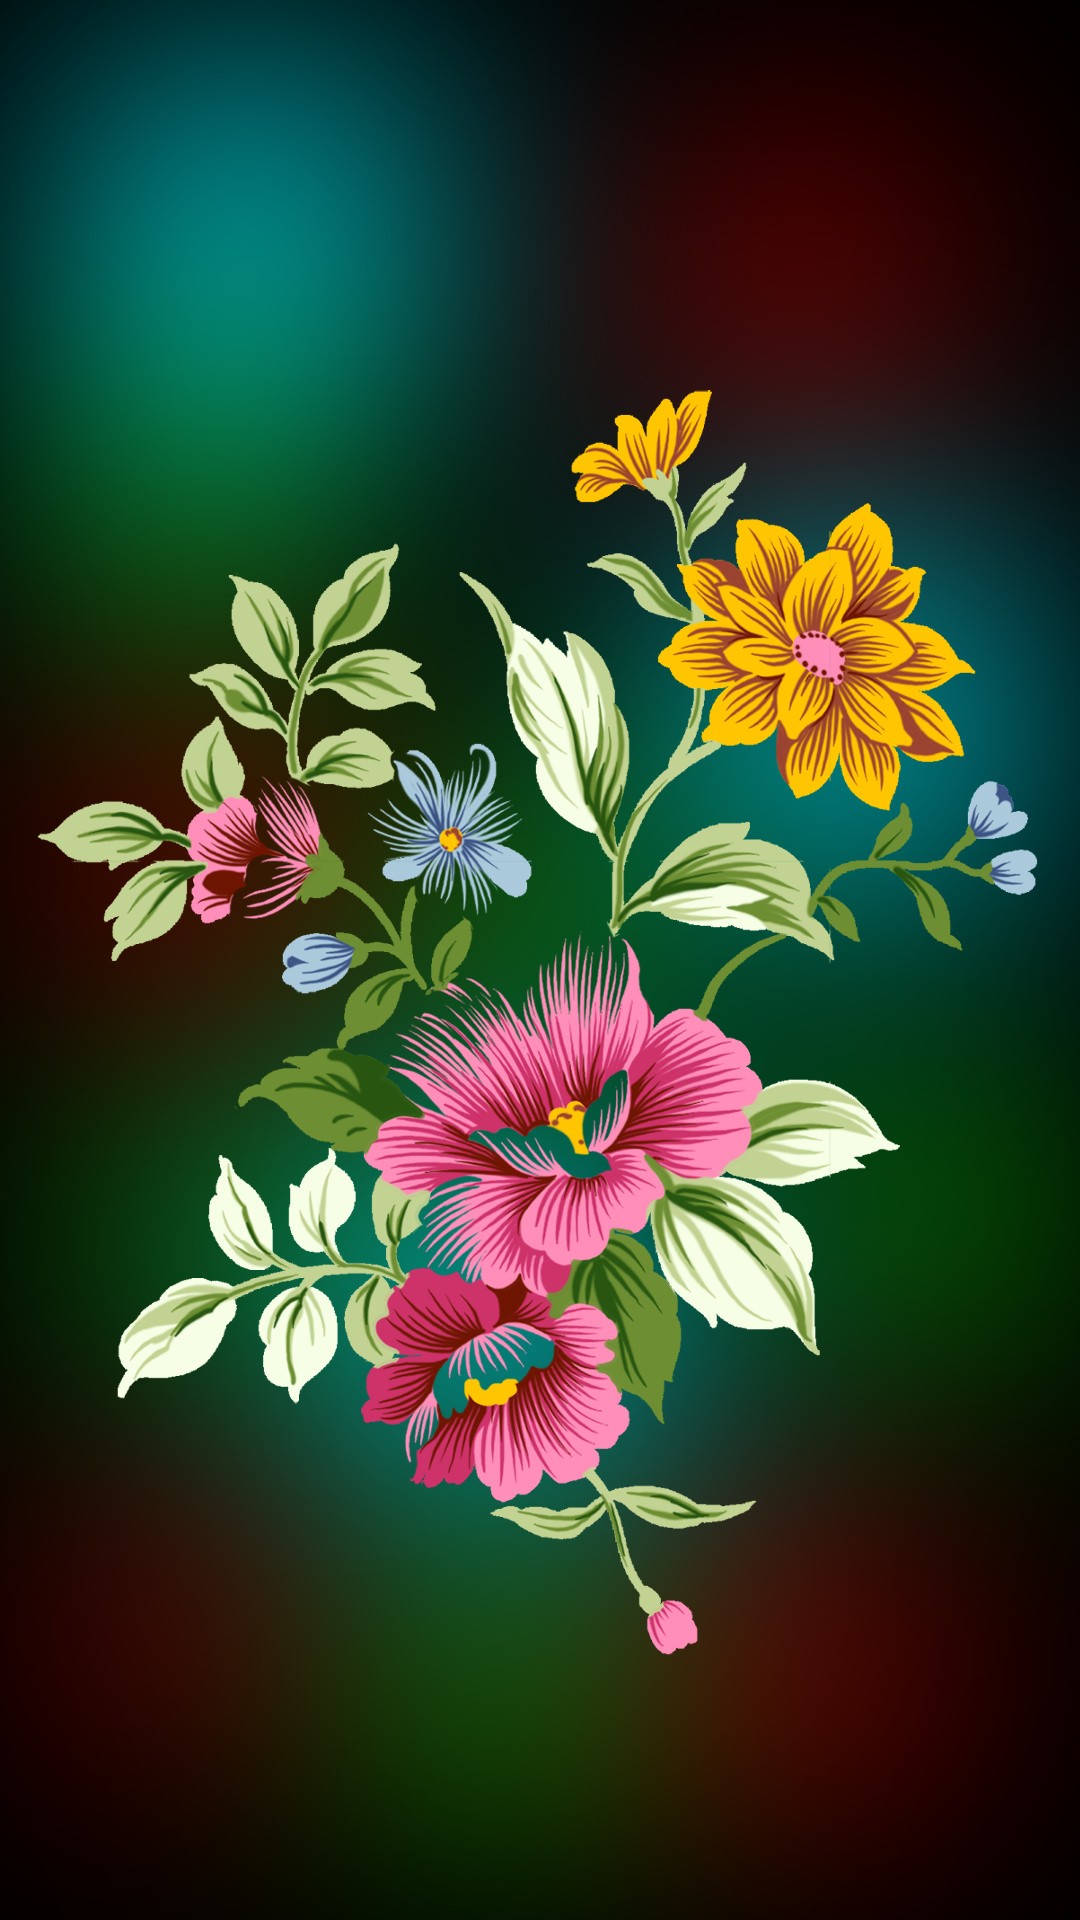 Flowers01 Wallpaper - [1080x1920]